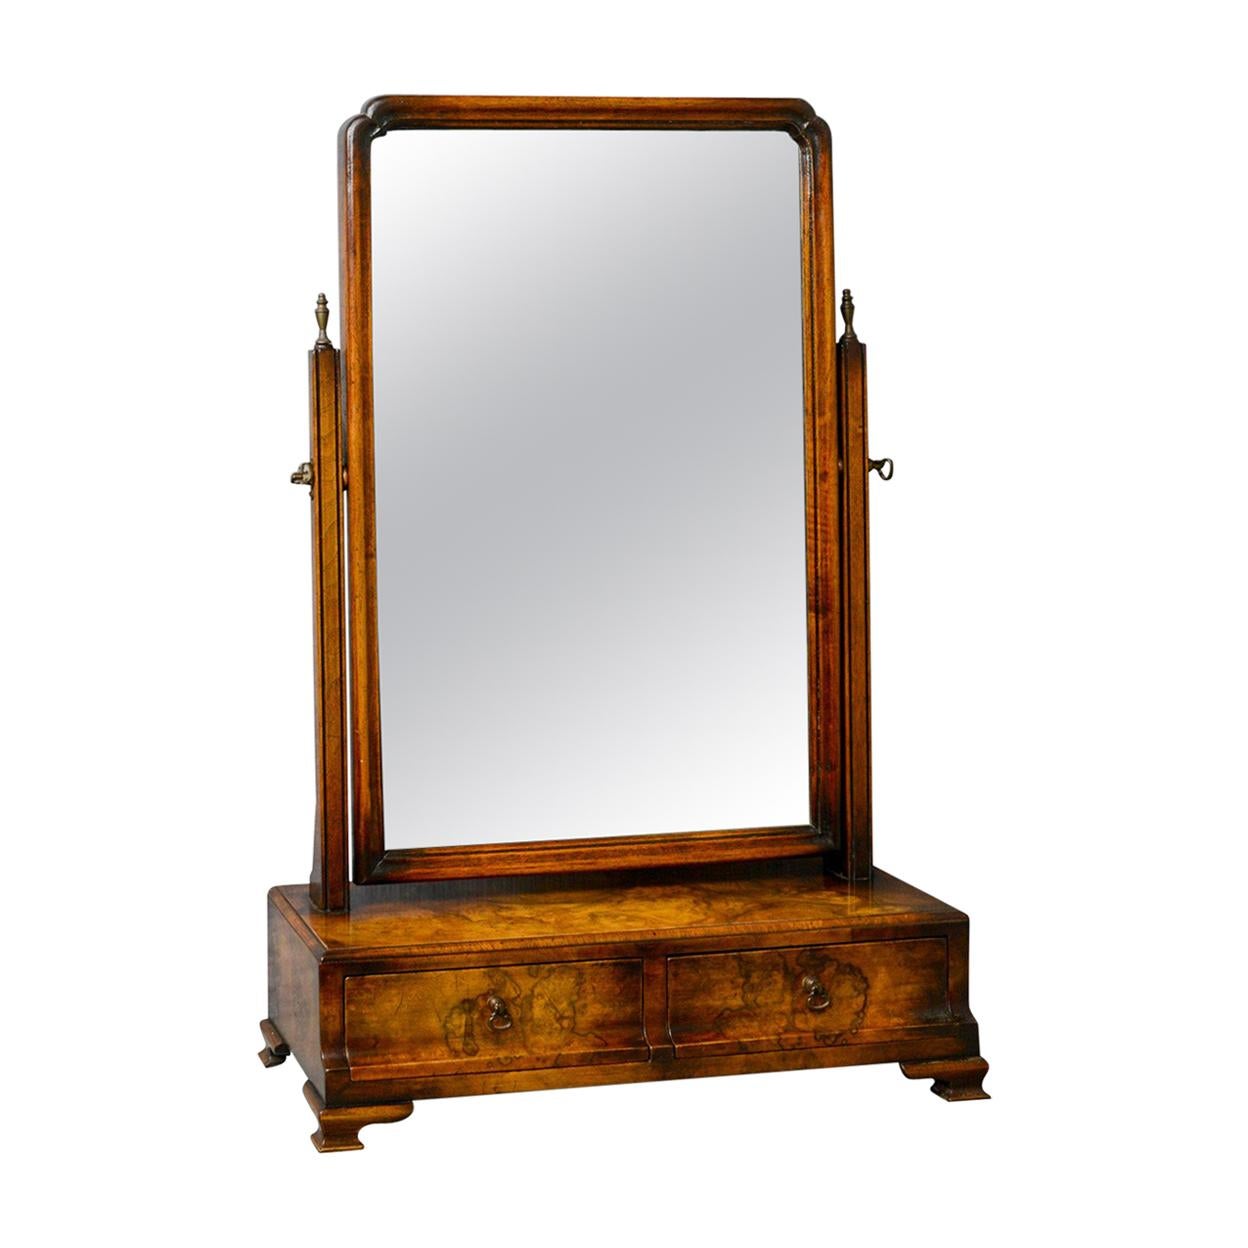 Antique Dressing Table Mirror, Burr Walnut Georgian Revival Vanity, Toilet